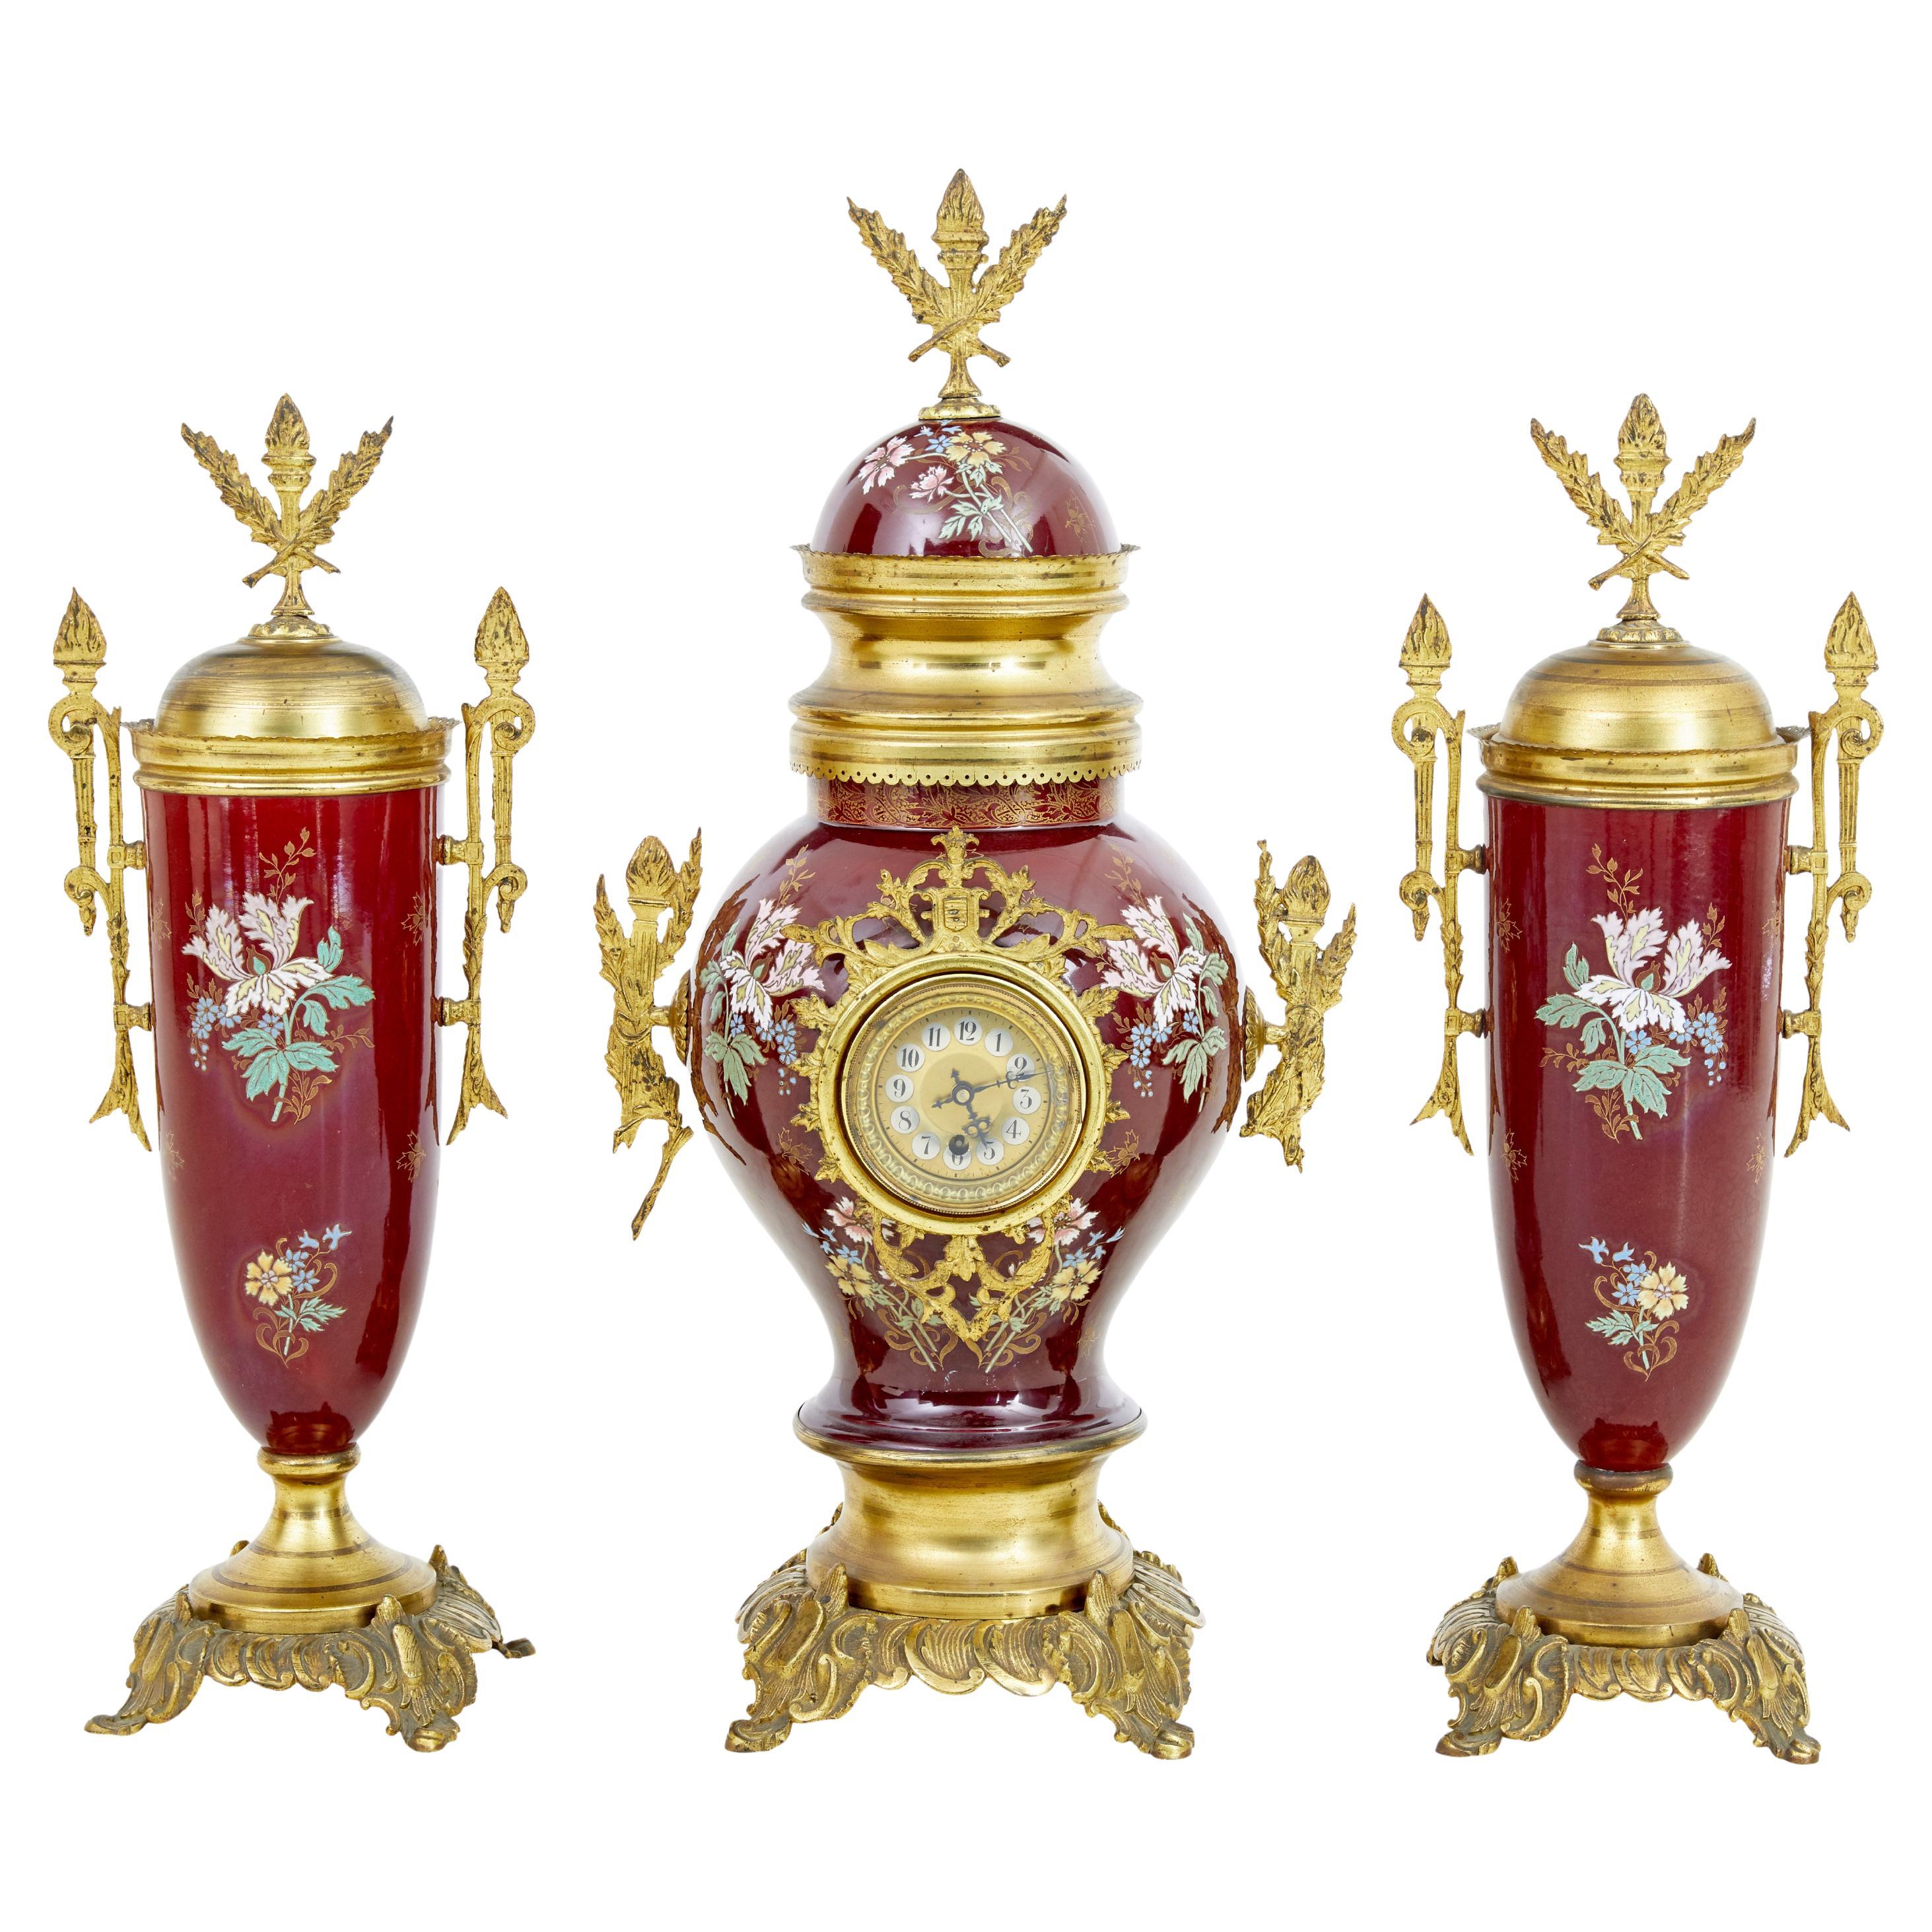 19th century French decorative toleware garniture set